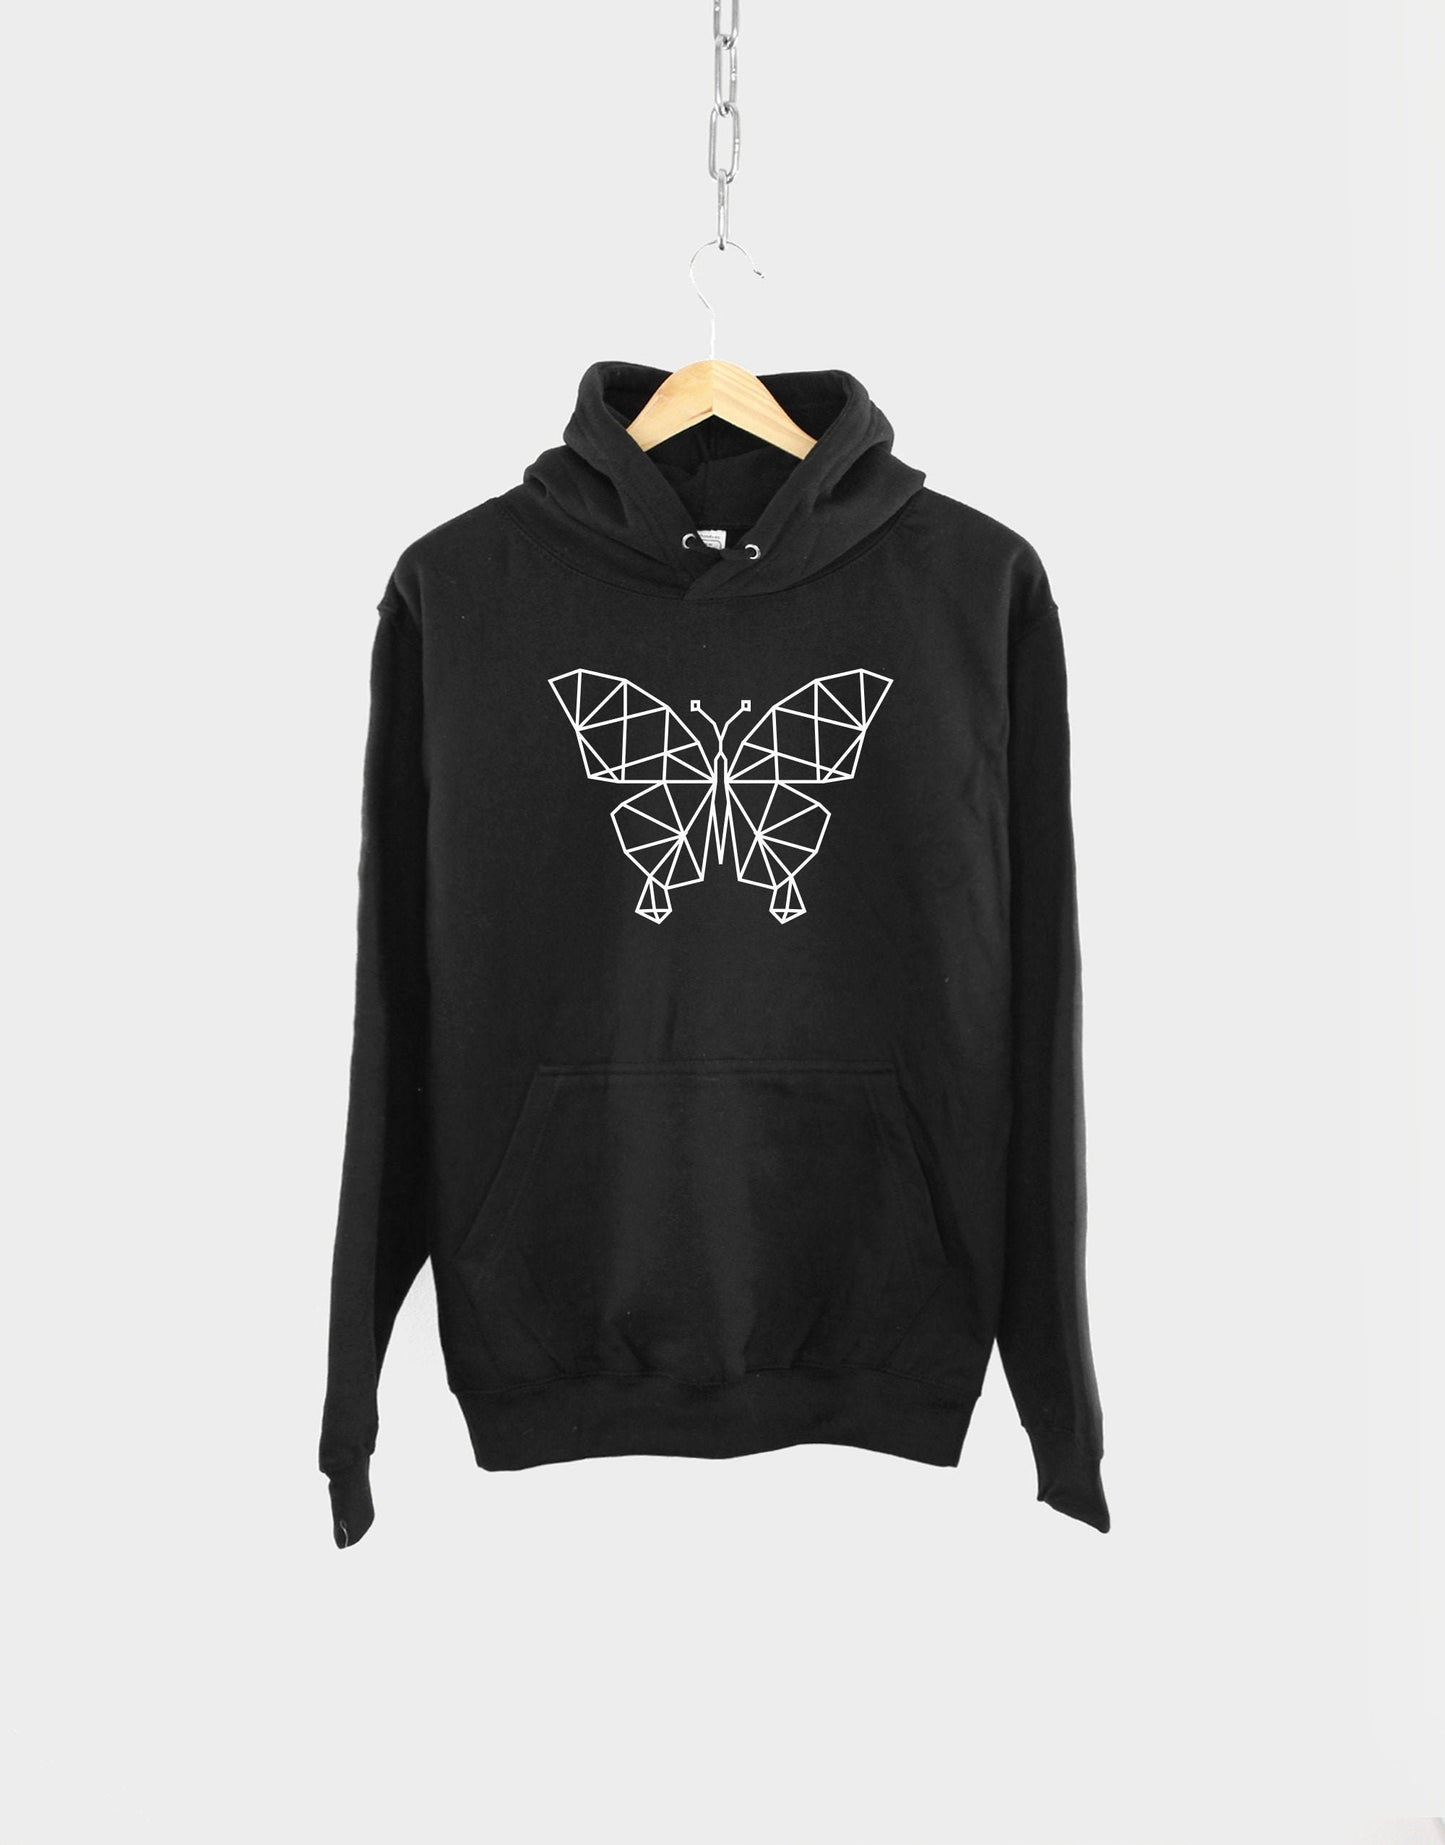 Geometric Butterfly Hoodie - Butterflies Hoody - Abstract Sweatshirt